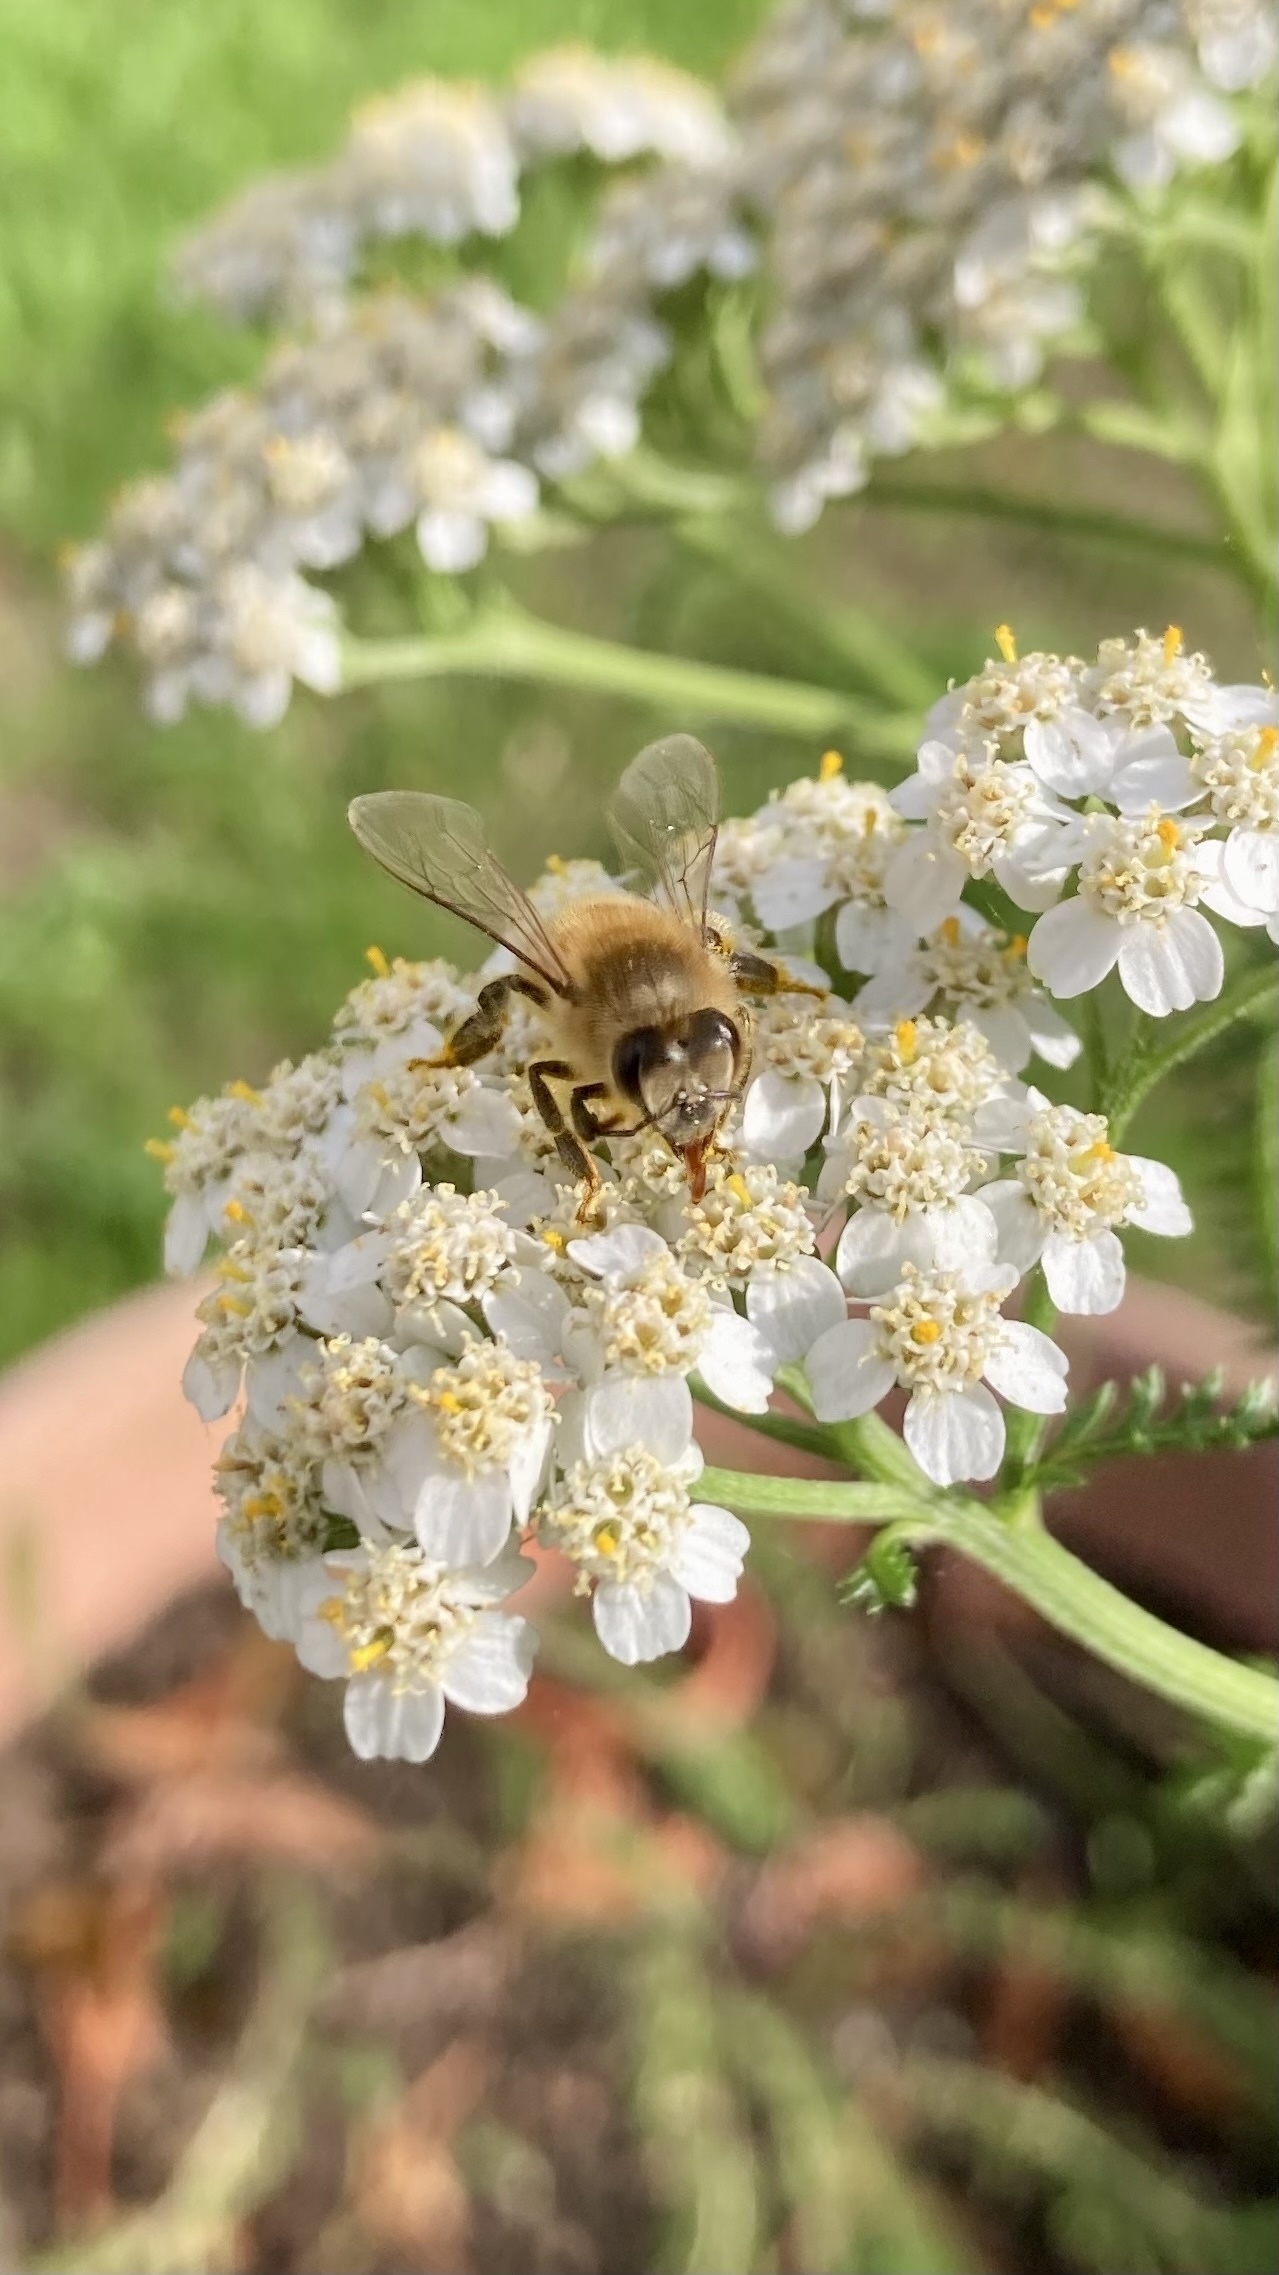 Honey bee on yarrow bloom with extended proboscis.